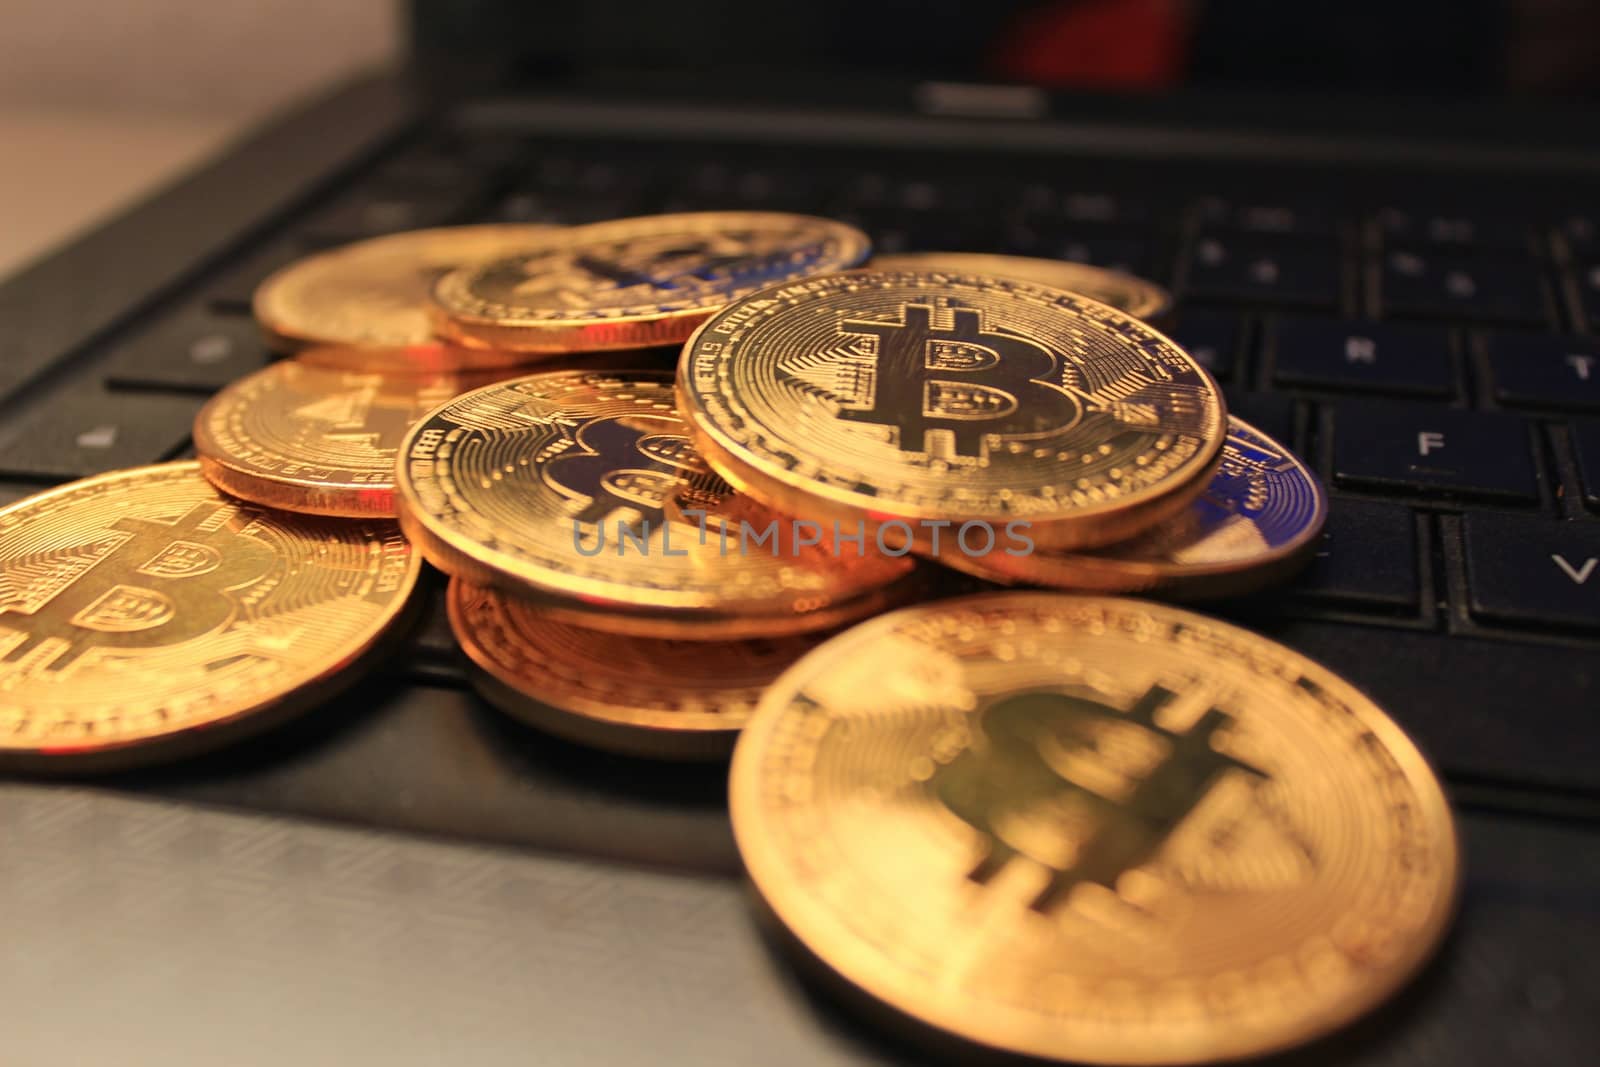 Many Golden bitcoins on white background